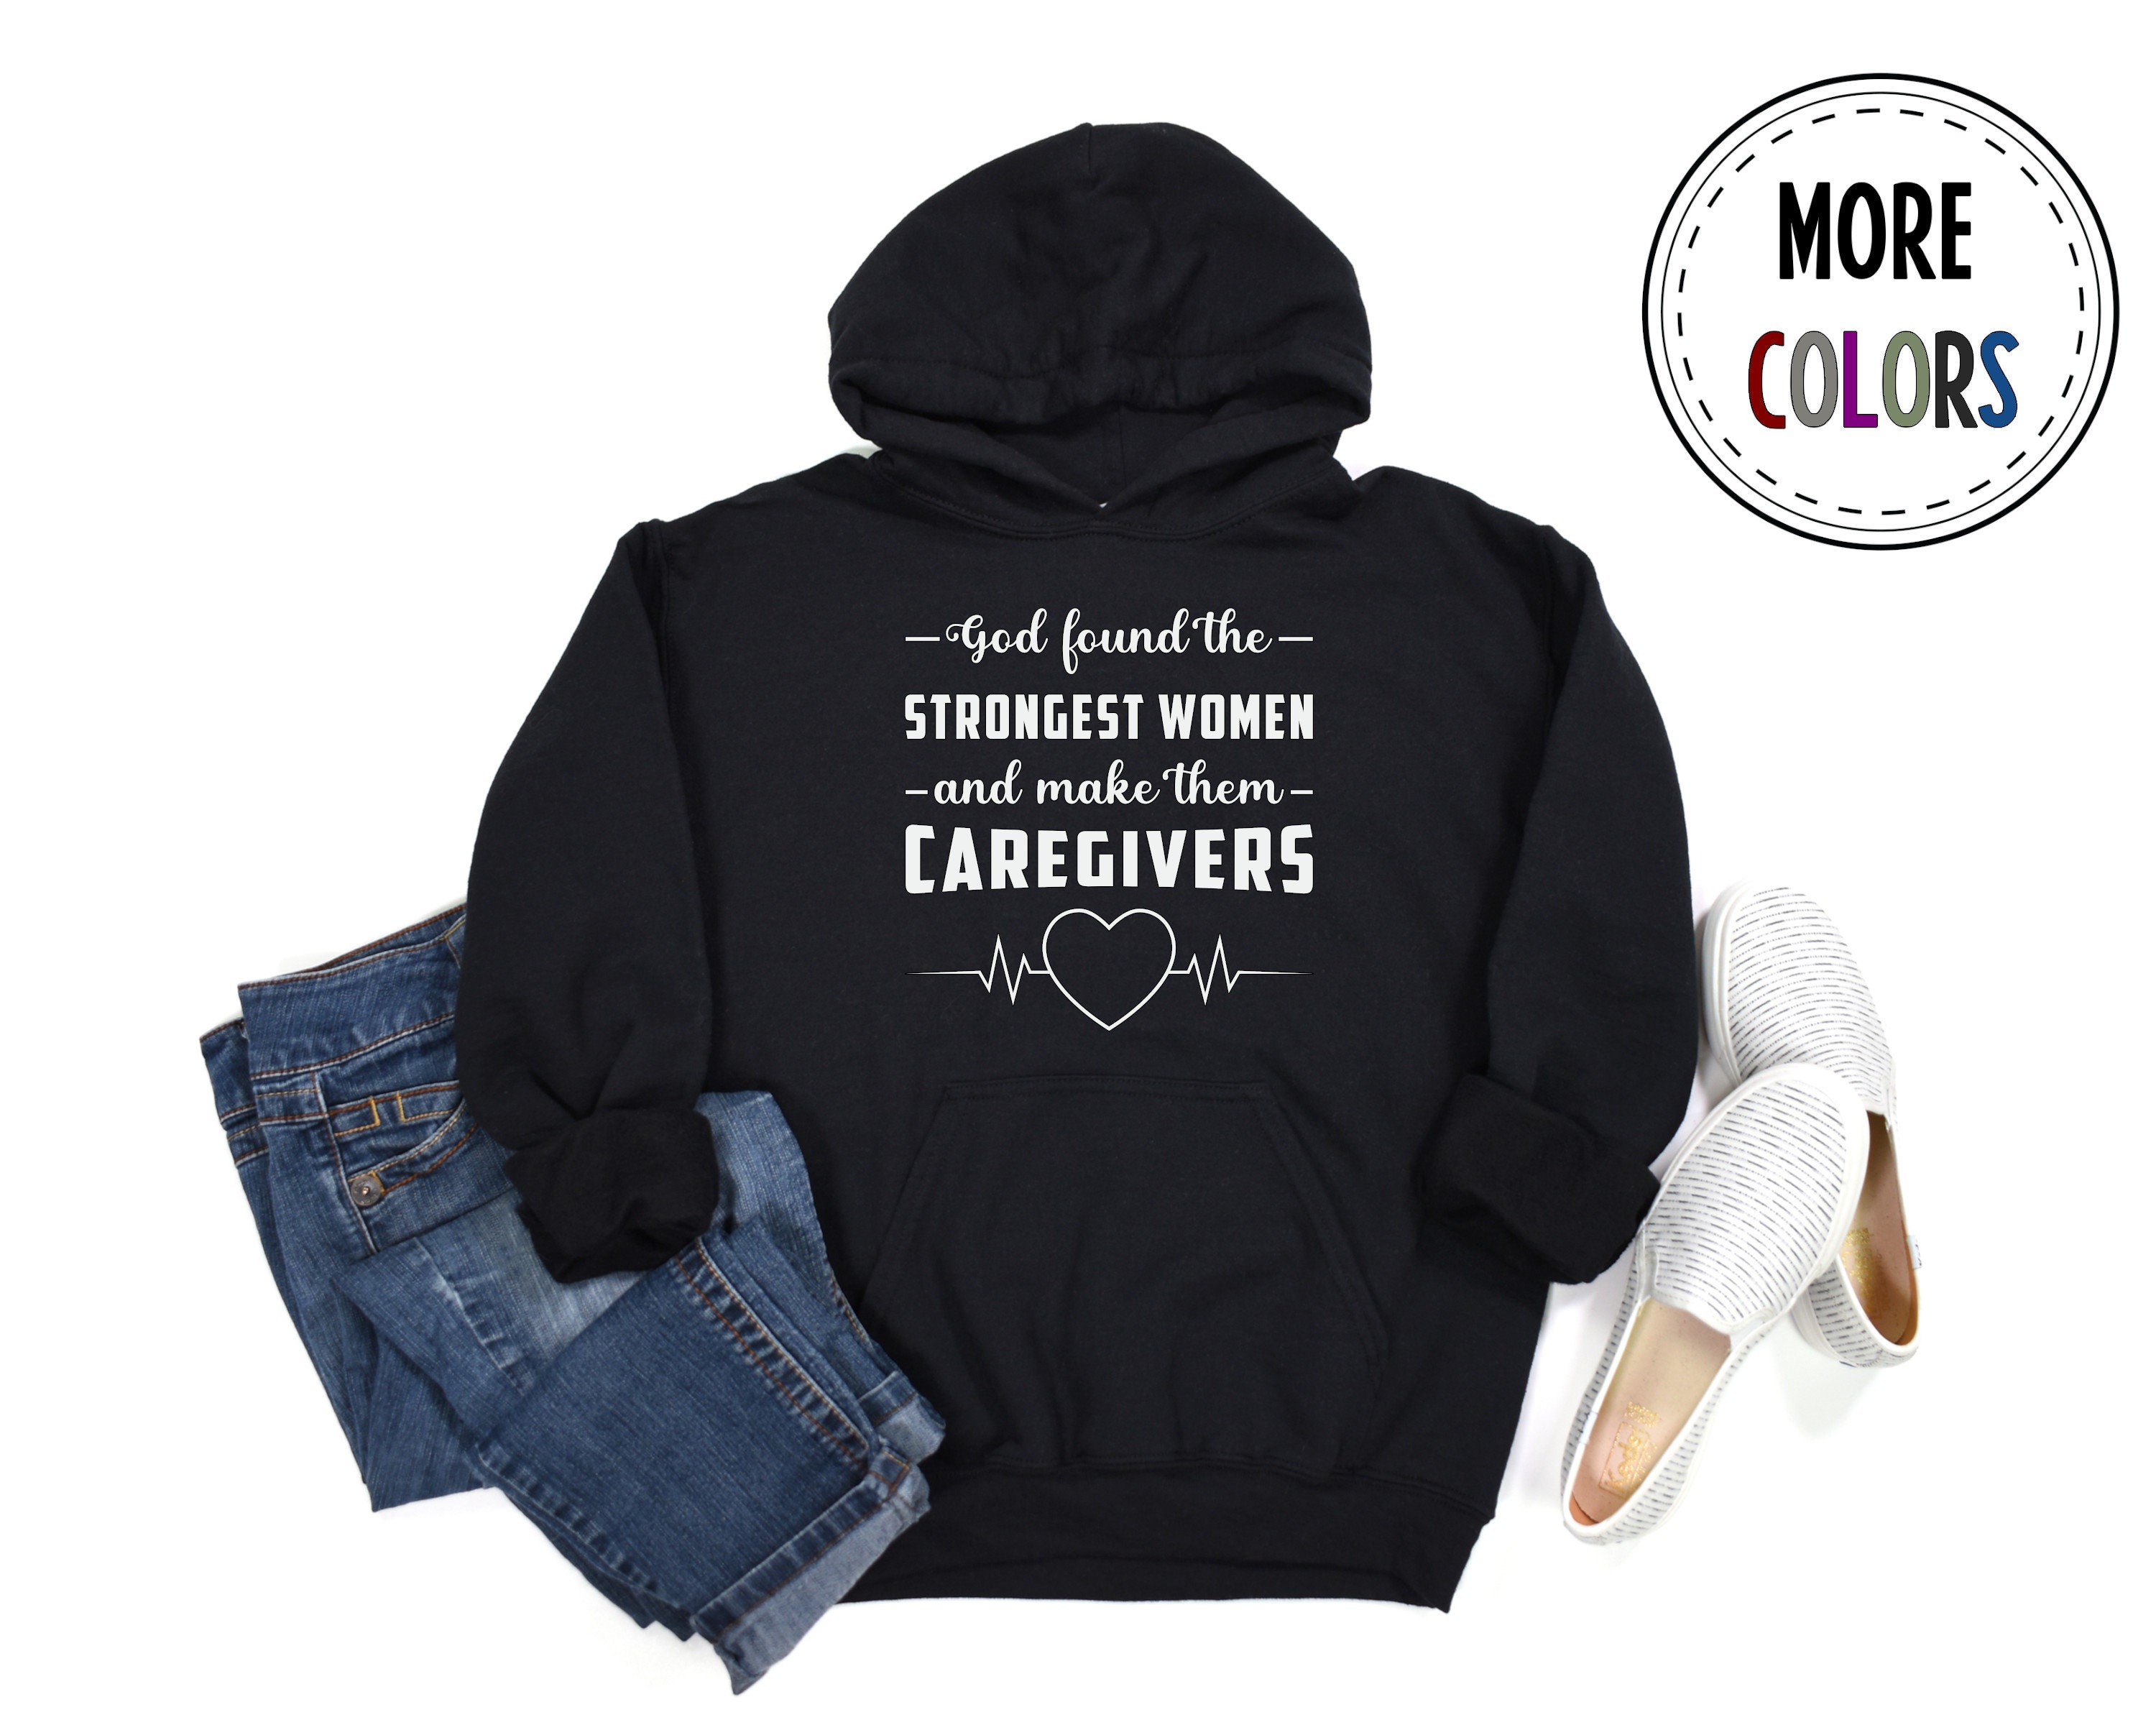 Caregiver Hoodie Care Hoodies Caregivers Sweater pic